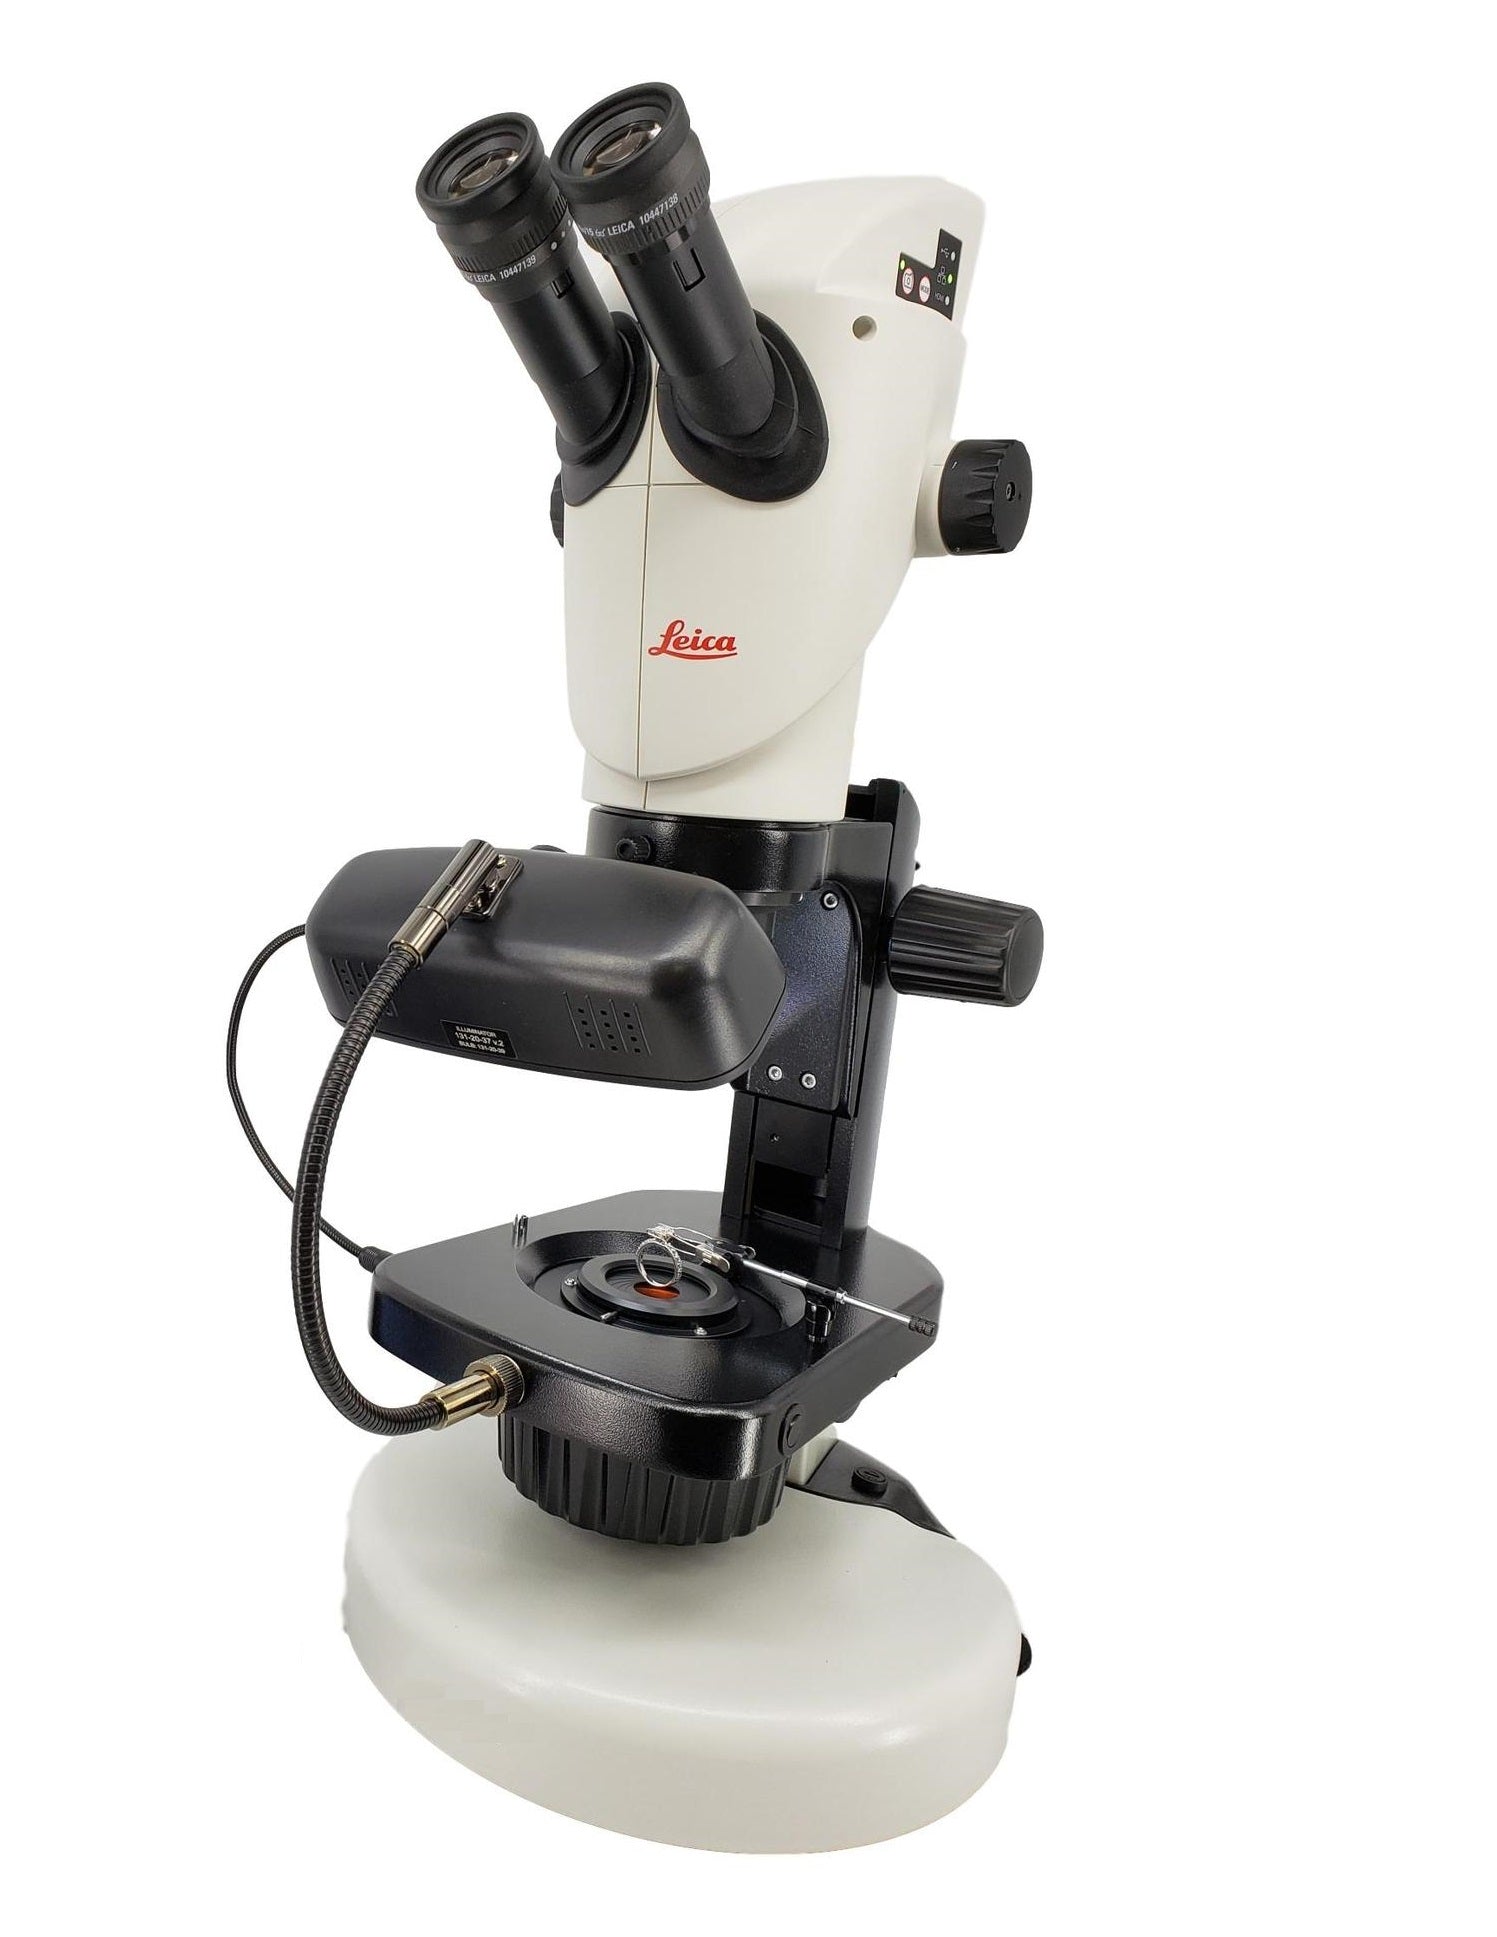 Jorgy Microscope Lens Paper J0869 : 280ct